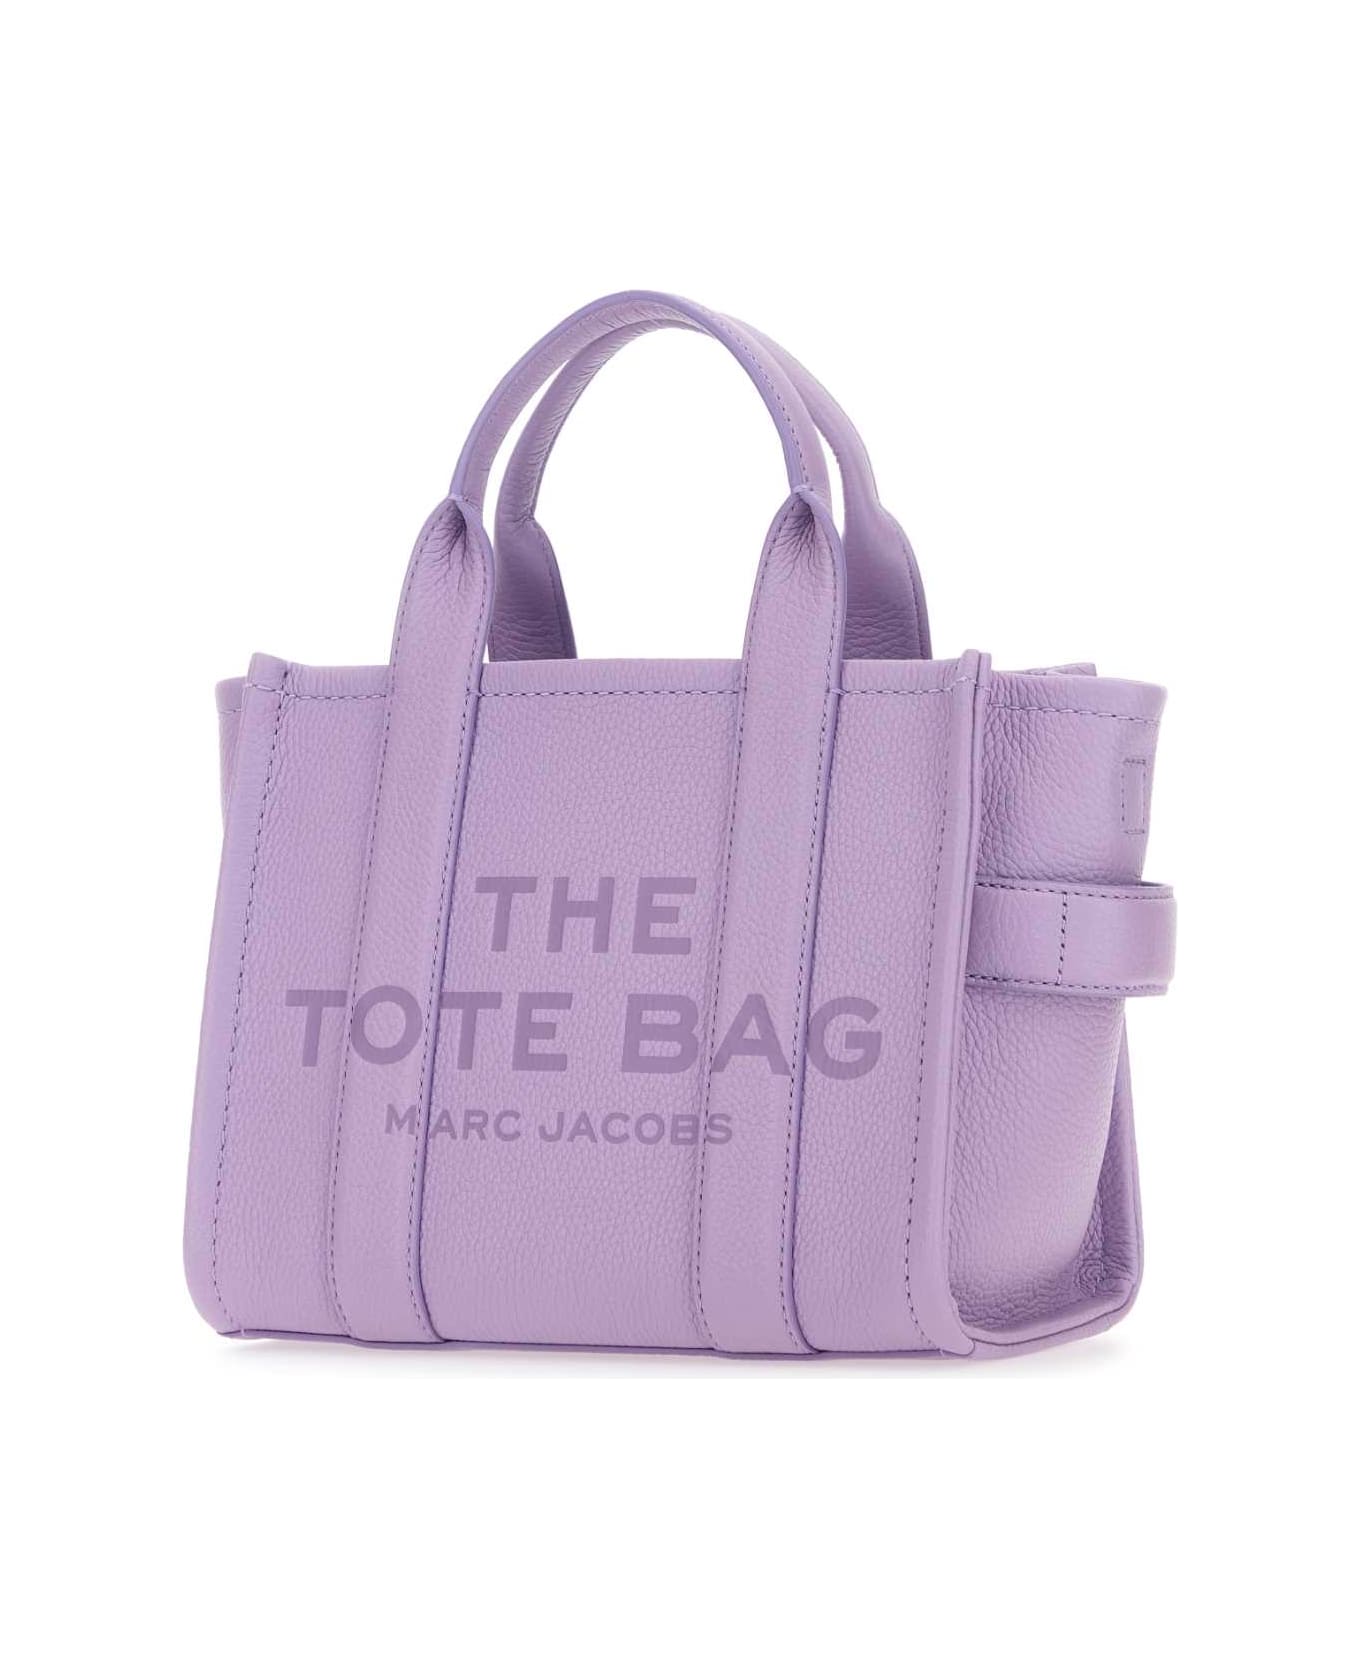 Marc Jacobs Lilac Leather Mini The Tote Bag Handbag - WISTERIA トートバッグ